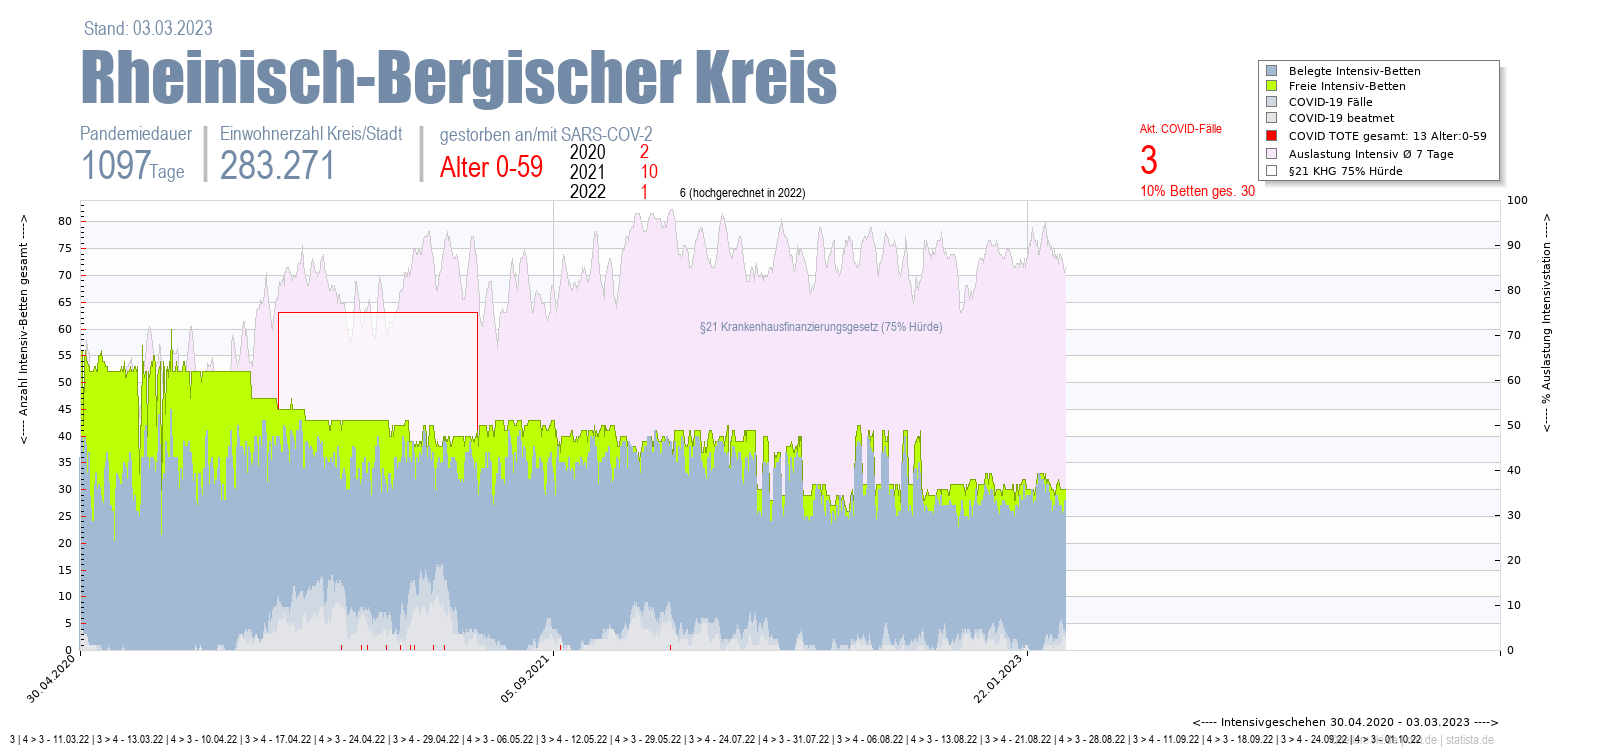 Intensivstation Auslastung Rheinisch-Bergischer Kreis Alter 0-59